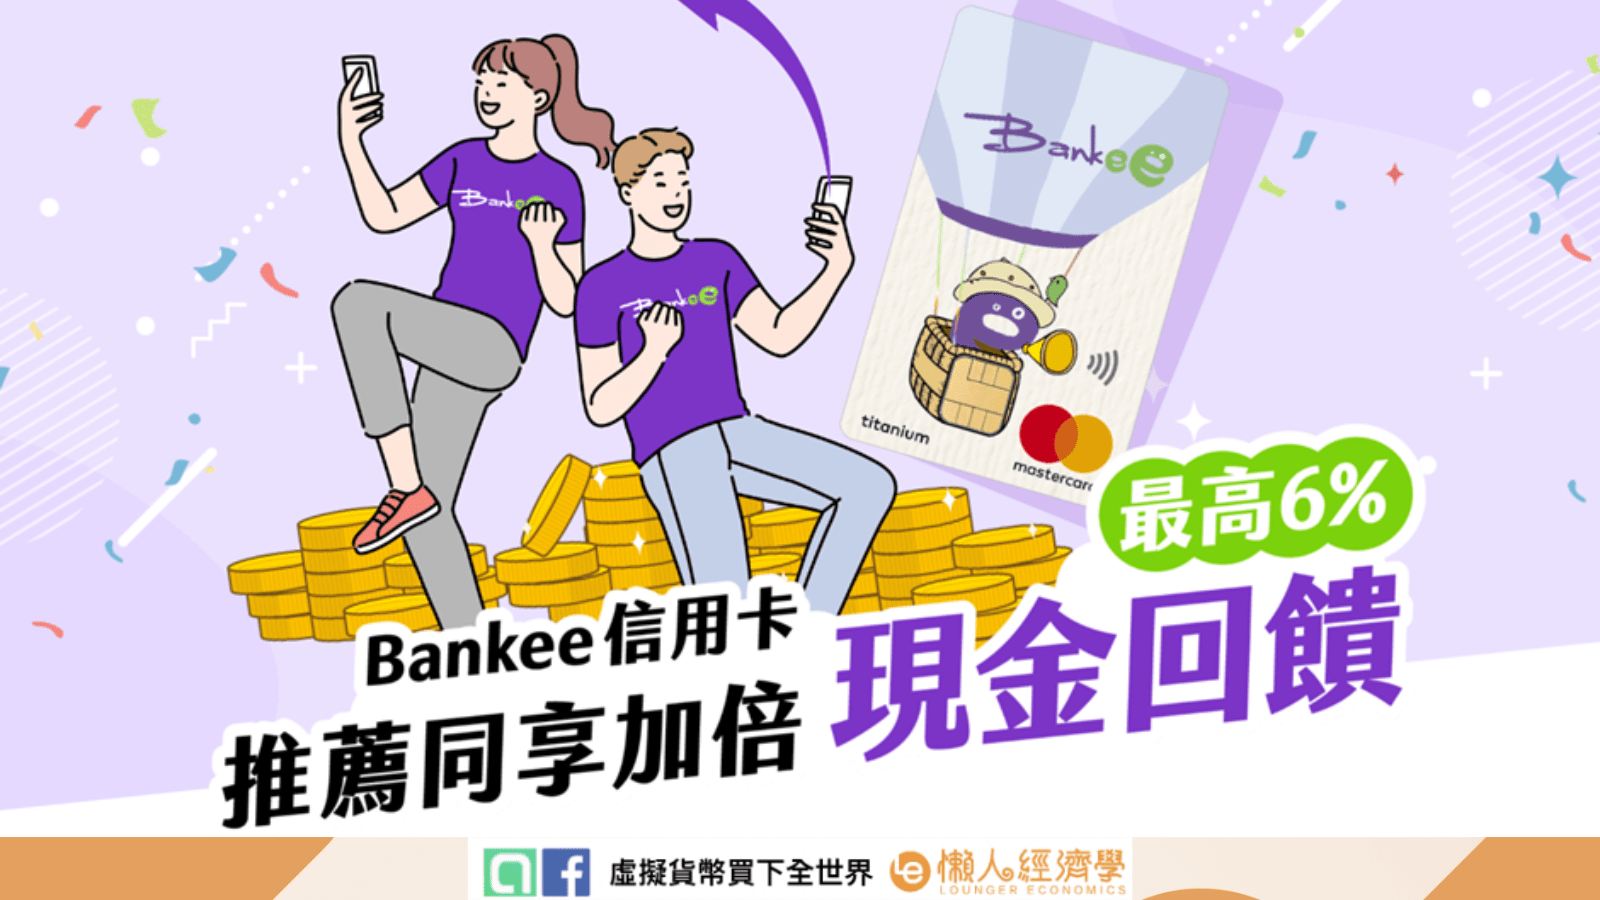 Bankee 也有推出信用卡服務